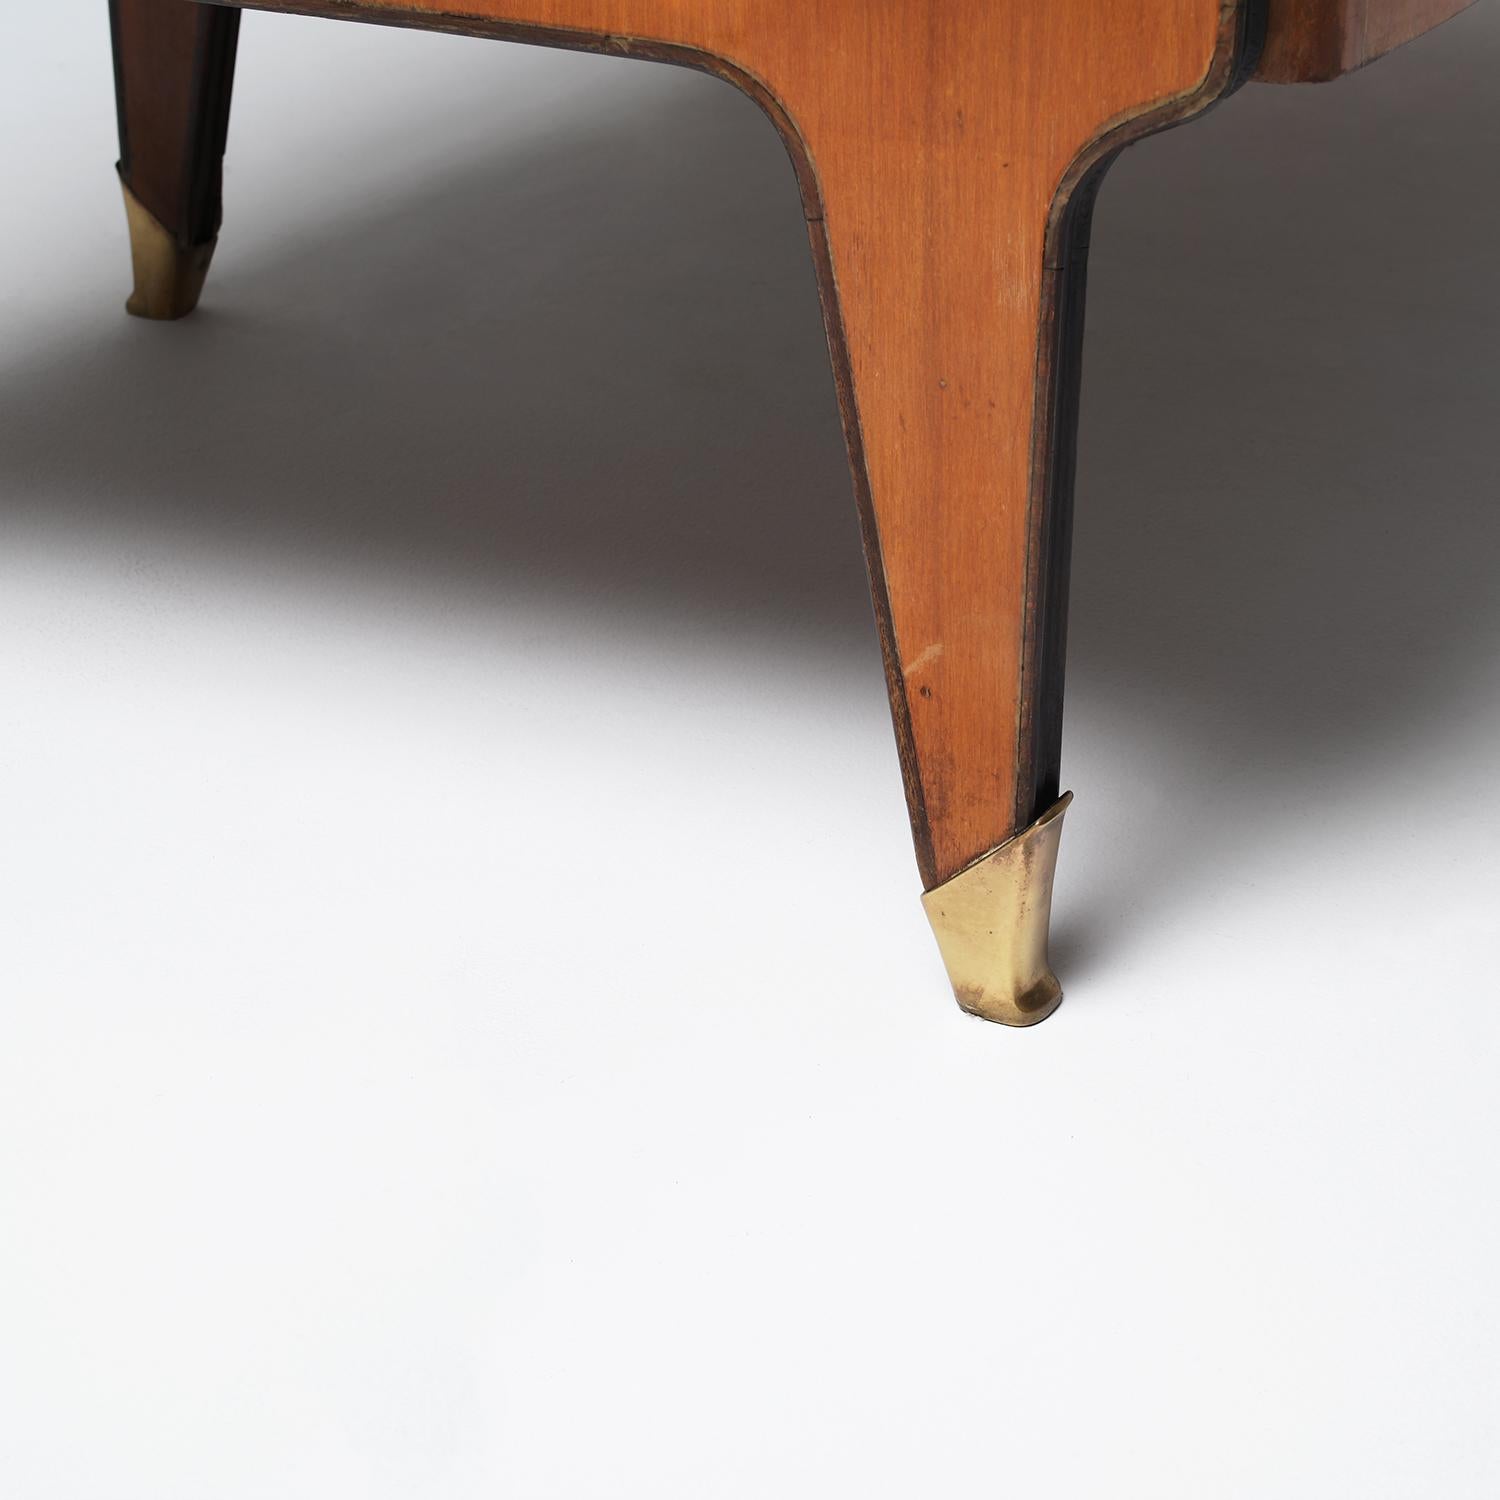 20th Century Italian Mahogany Writing Table - Vintage Desk by Vittorio Dassi For Sale 14